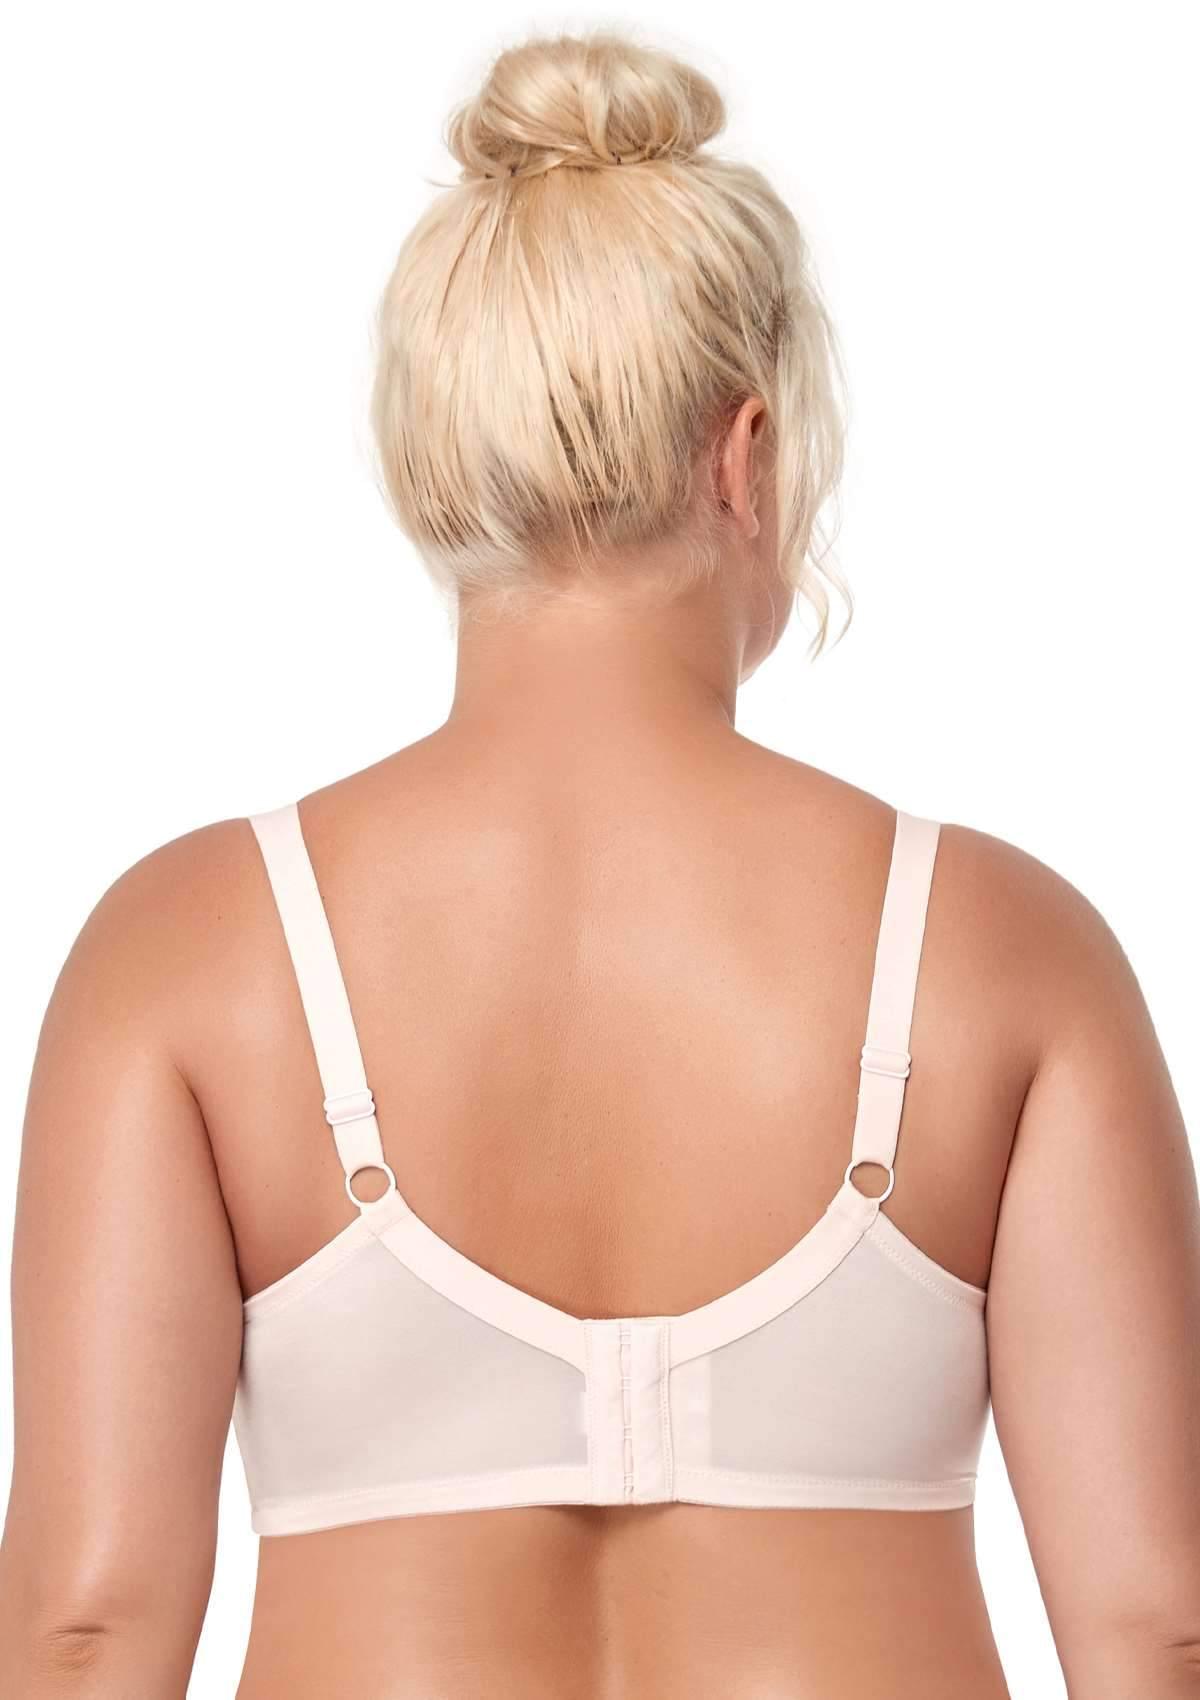 HSIA Blossom Matching Lacey Underwear And Bra Set: Sexy Lace Bra - Dusty Peach / 46 / DDD/F